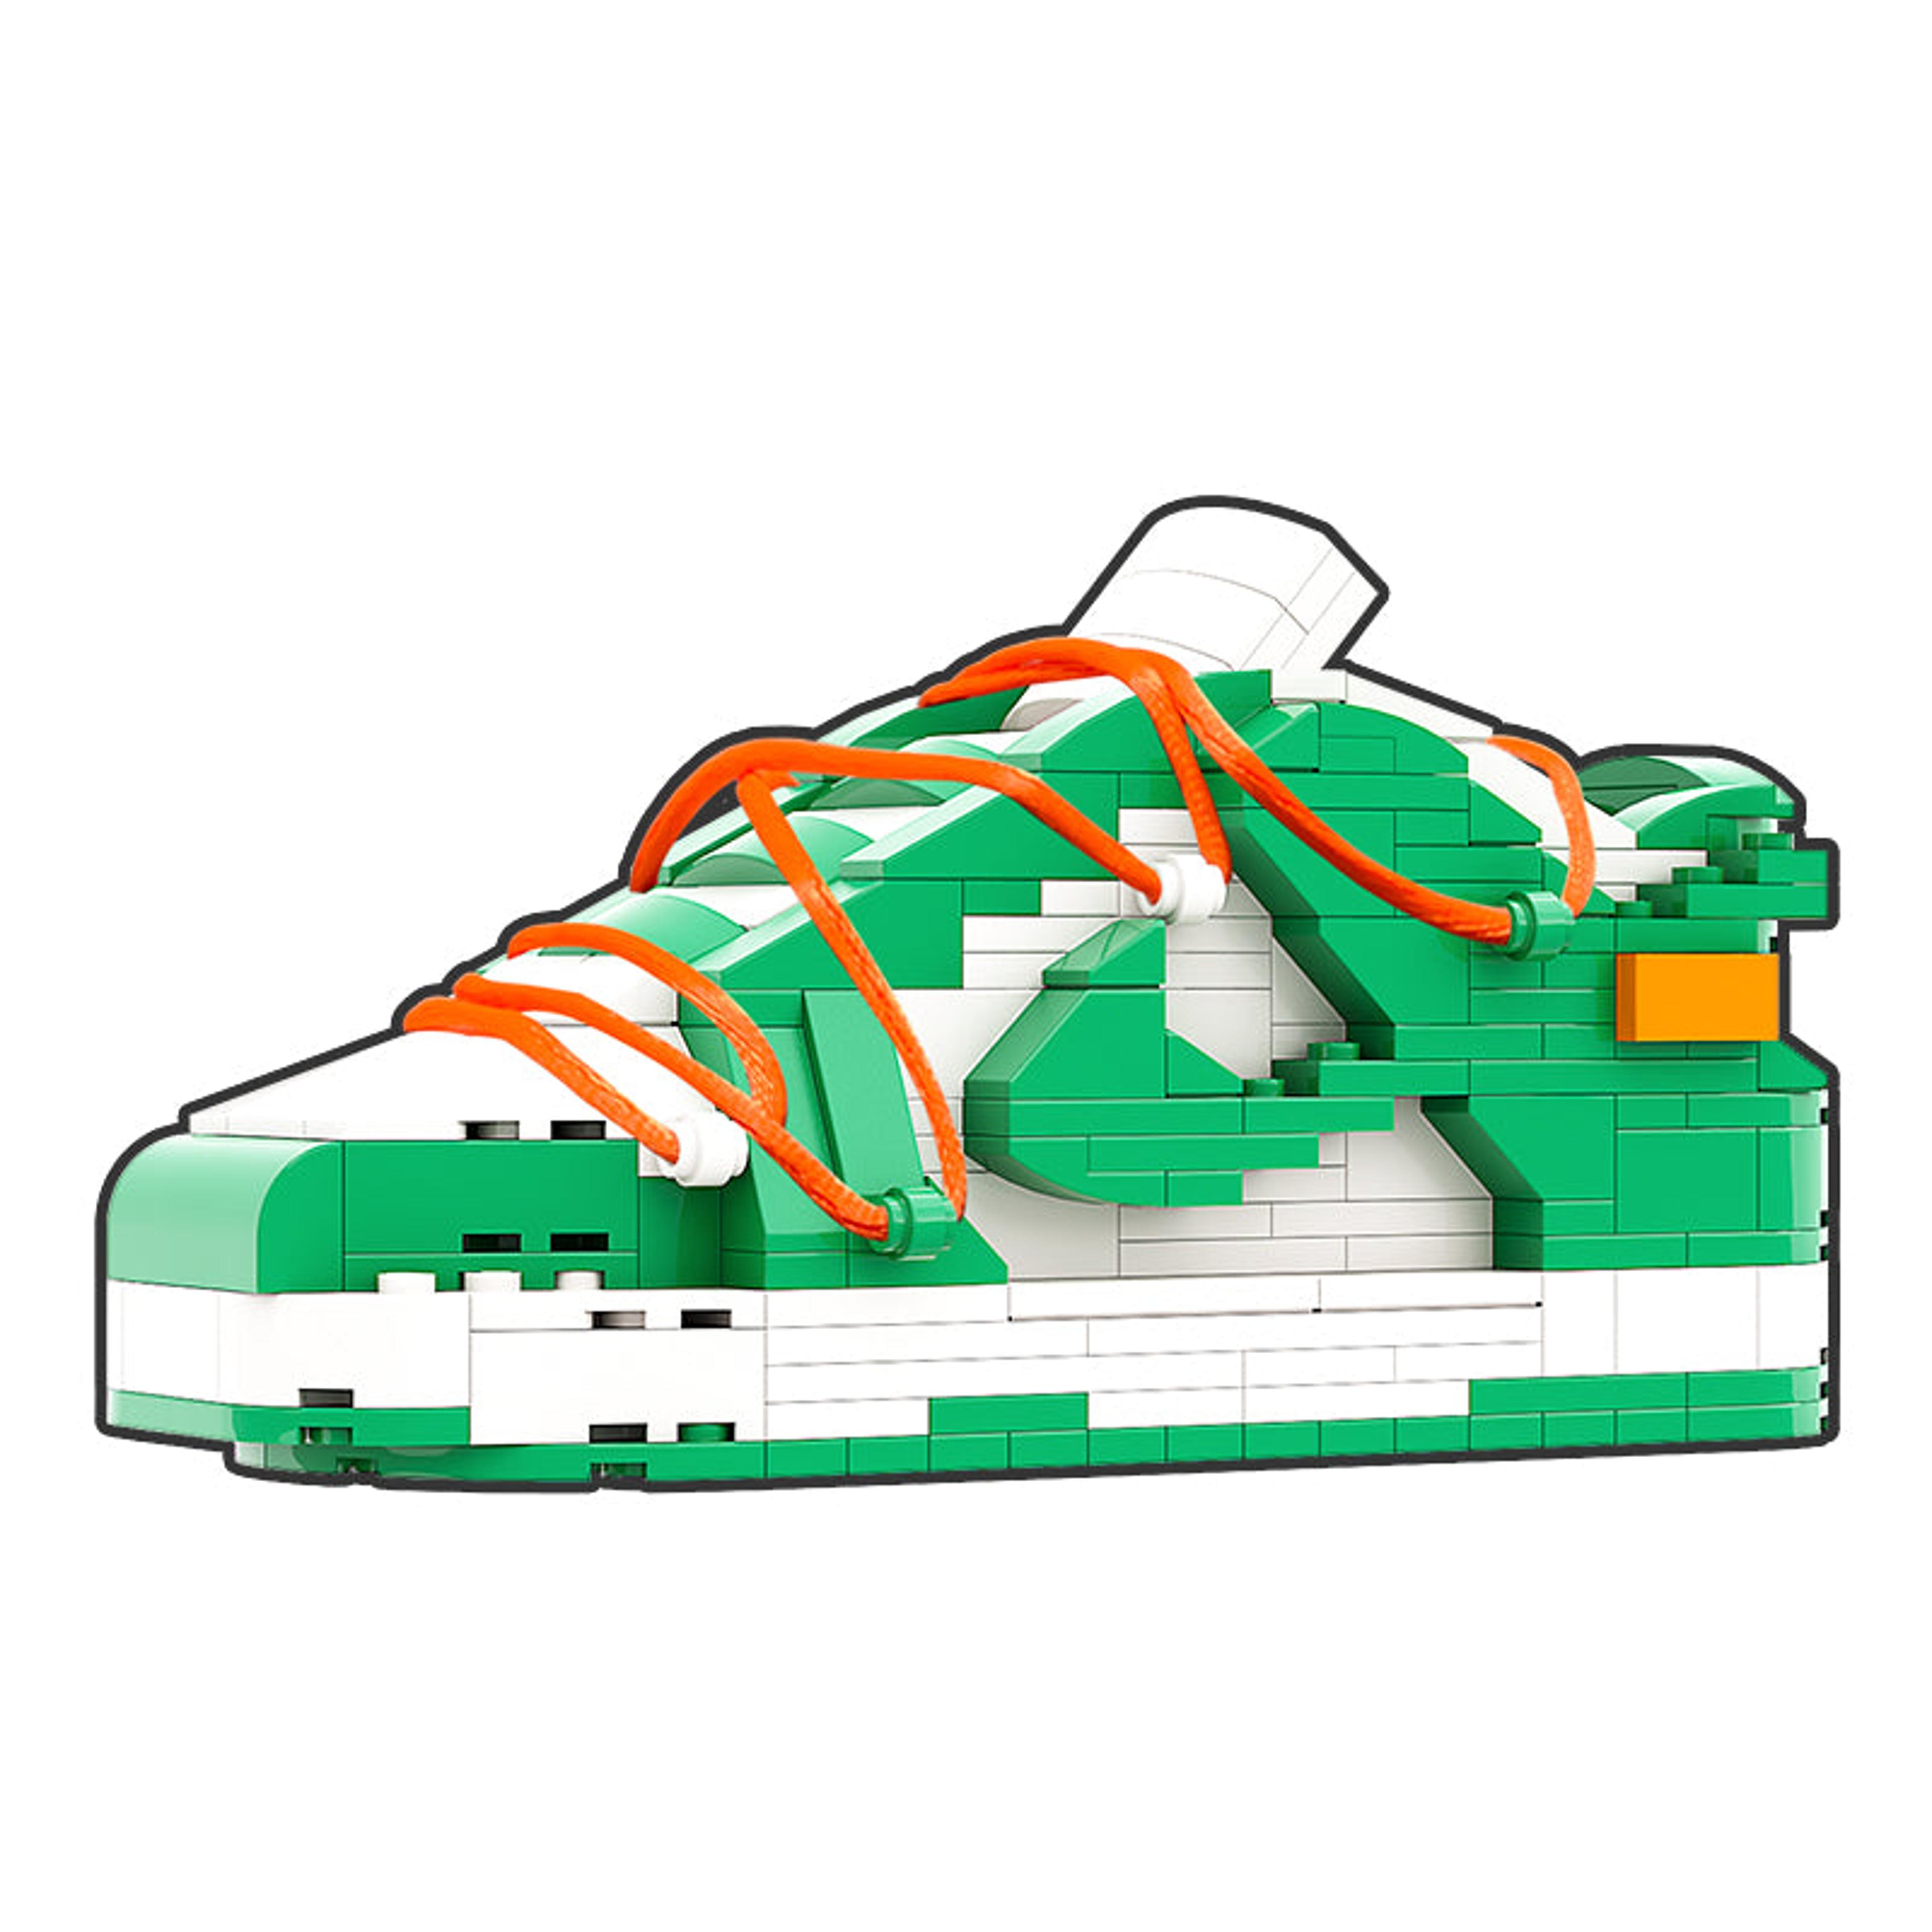 REGULAR  "SB Dunk Off-White Pine Green" Sneaker Bricks with Mini